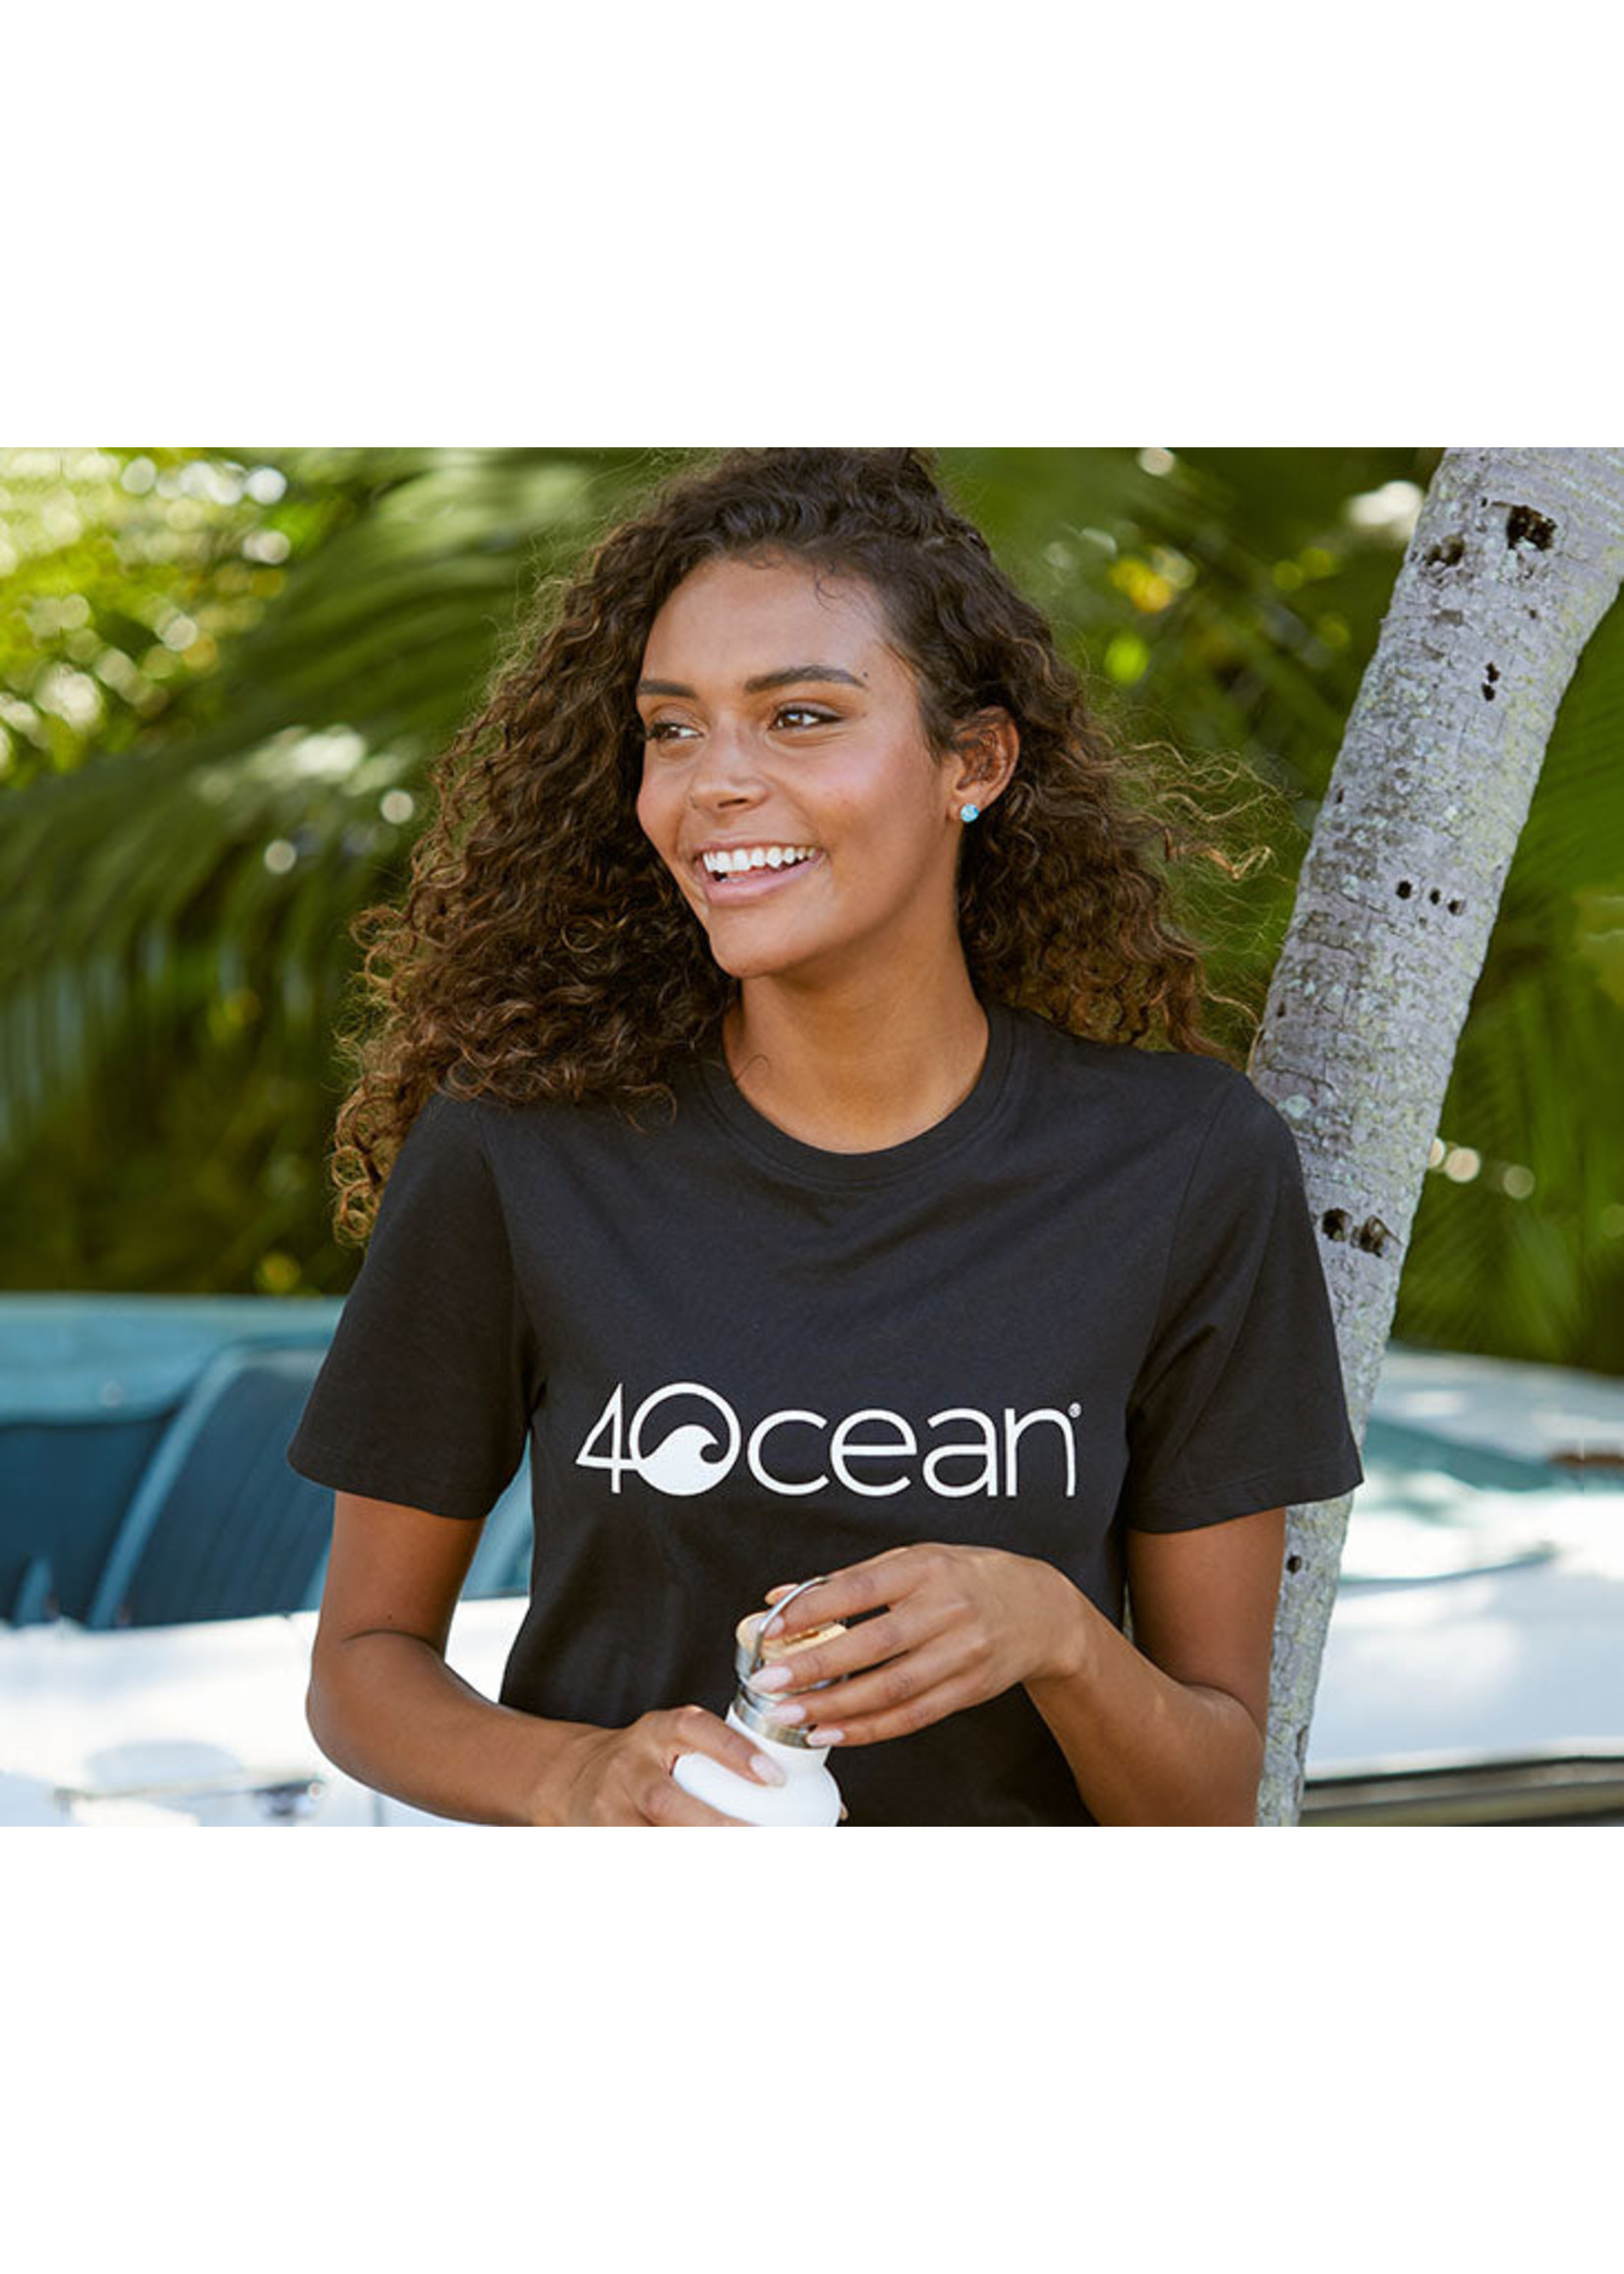 belastning Zoom ind Rastløs 4ocean Logo T-Shirt - Tampa Bay Outfitters